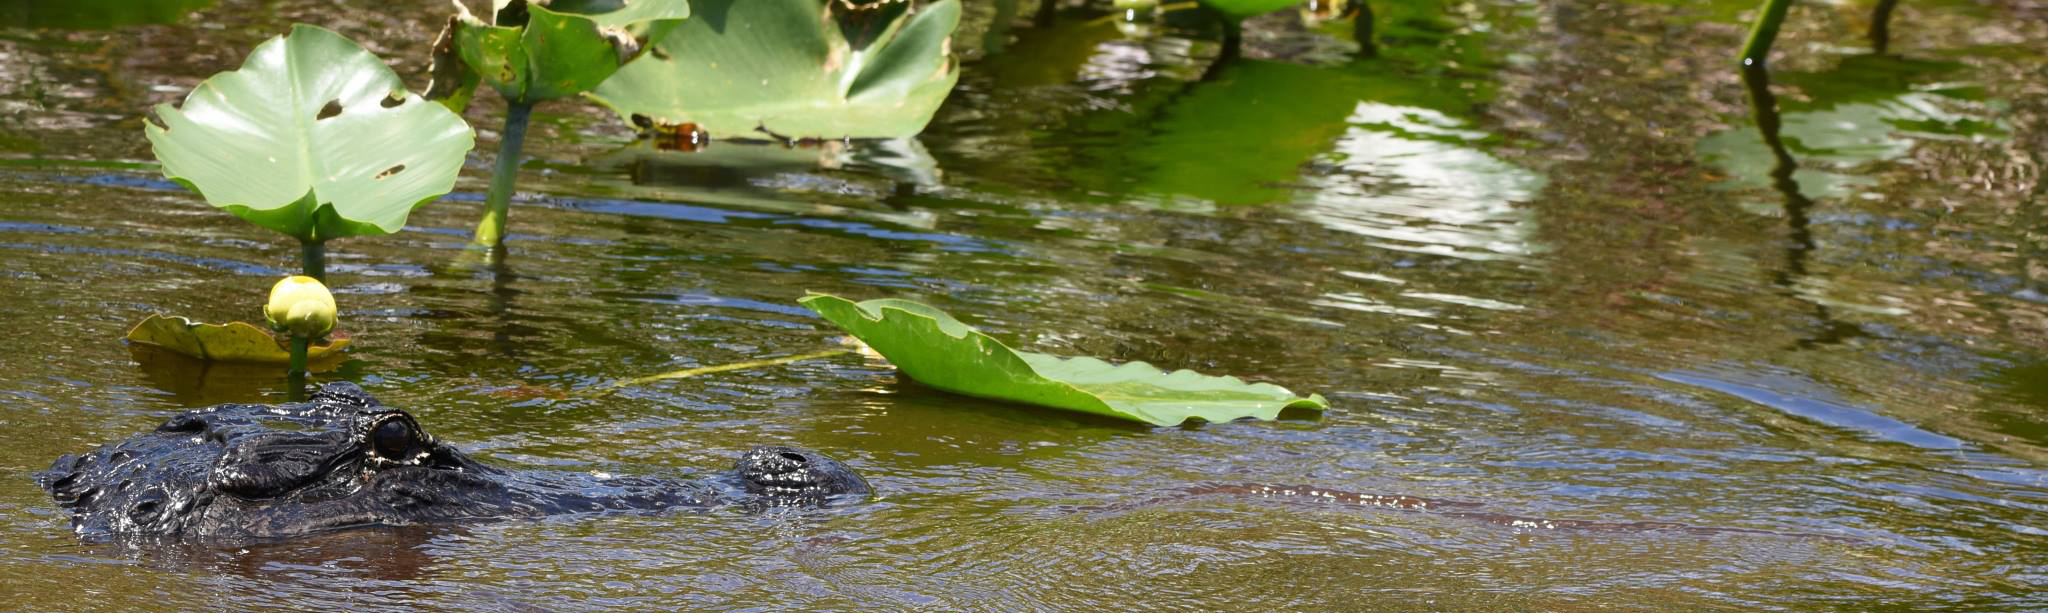 Alligator, Florida Everglades plants